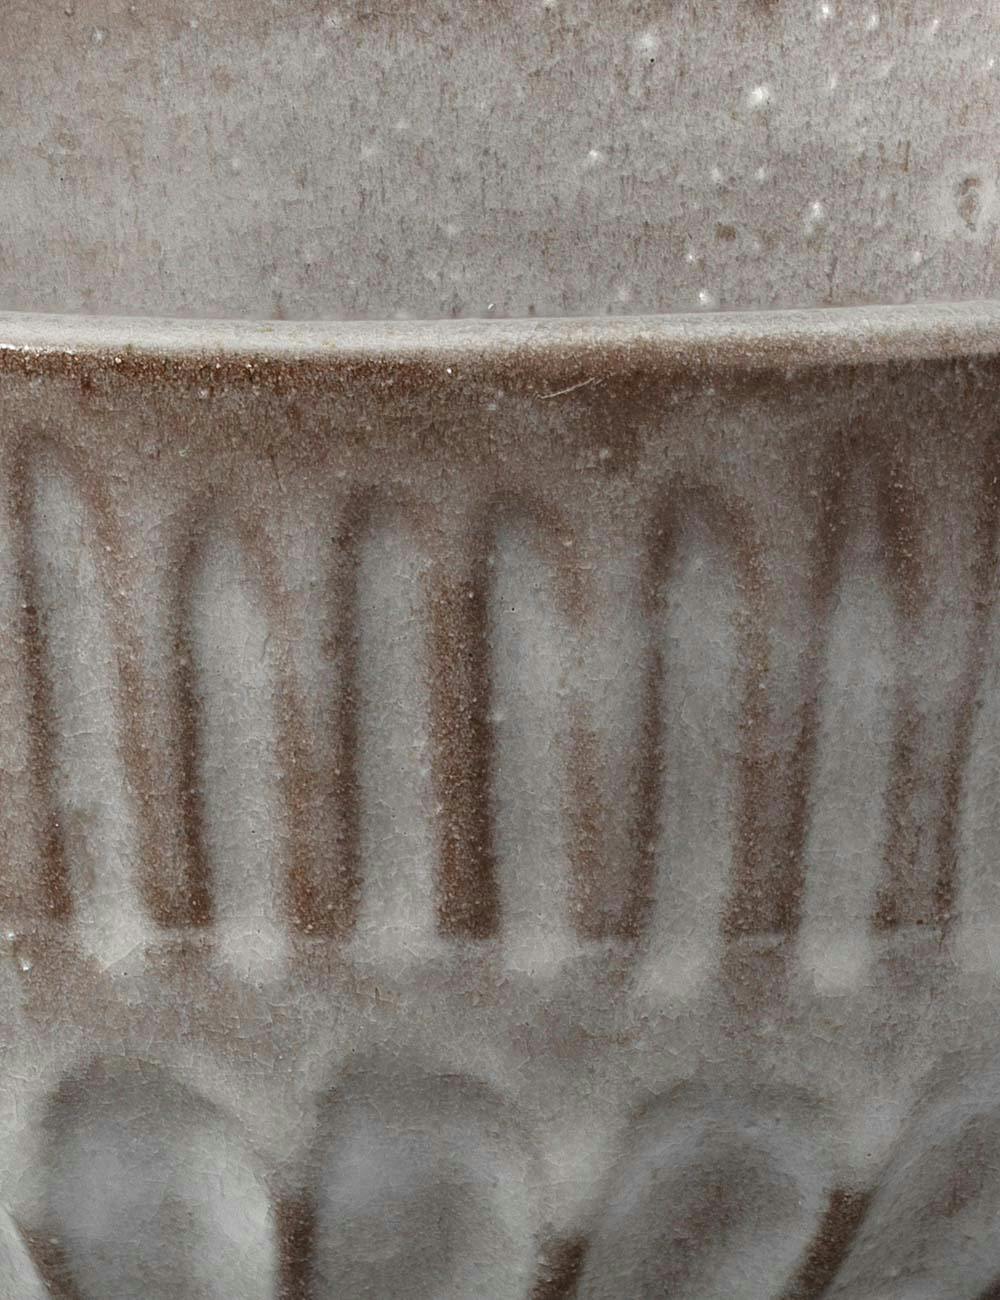 Yadith Handmade Ceramic Decorative Bowl